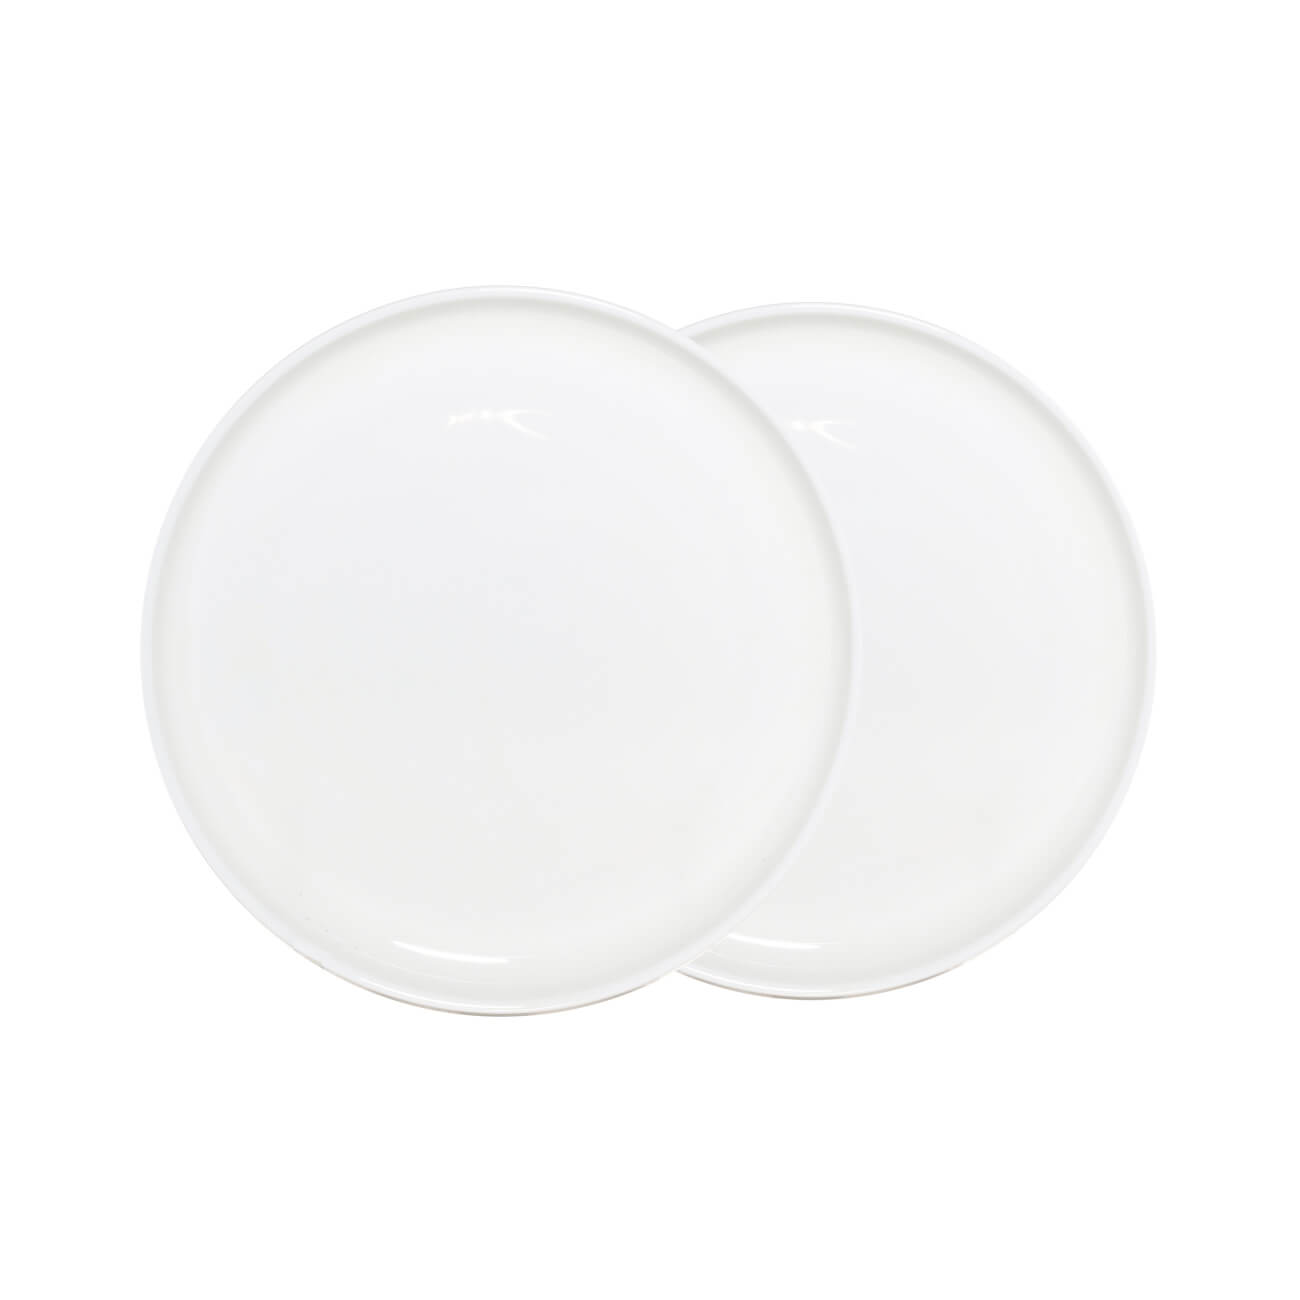 Тарелка десертная, 20 см, 2 шт, фарфор F, белая, Ideal white салатник 15х7 см 800 мл фарфор f белая ideal white